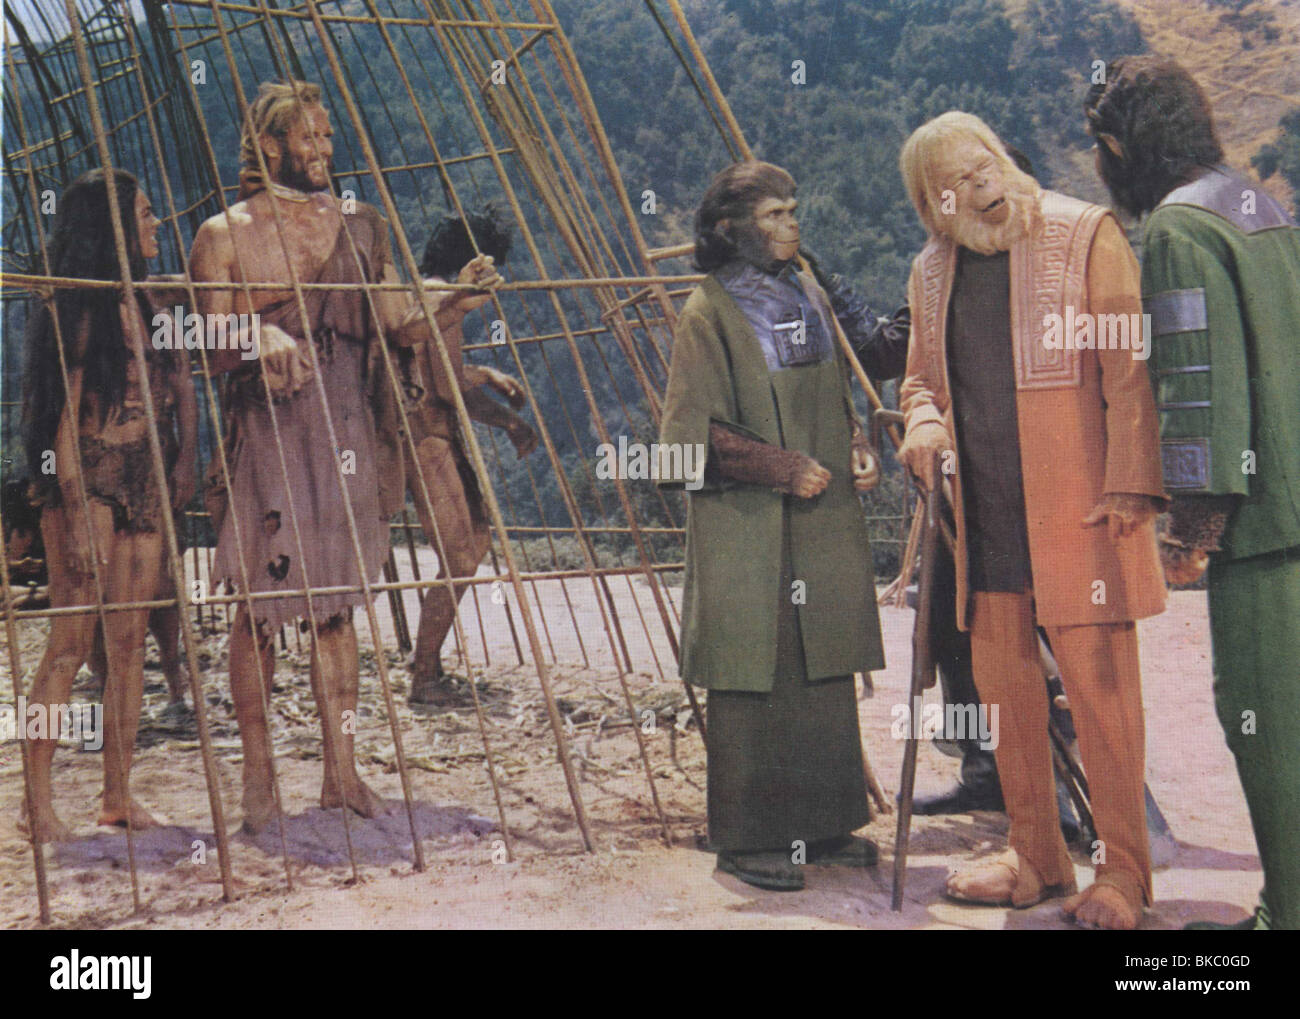 PLANET OF THE APES (1968) LINDA HARRISON, CHARLTON HESTON, KIM HUNTER, MAURICE EVANS, RODDY McDOWALL PLAP 003FOH Stock Photo